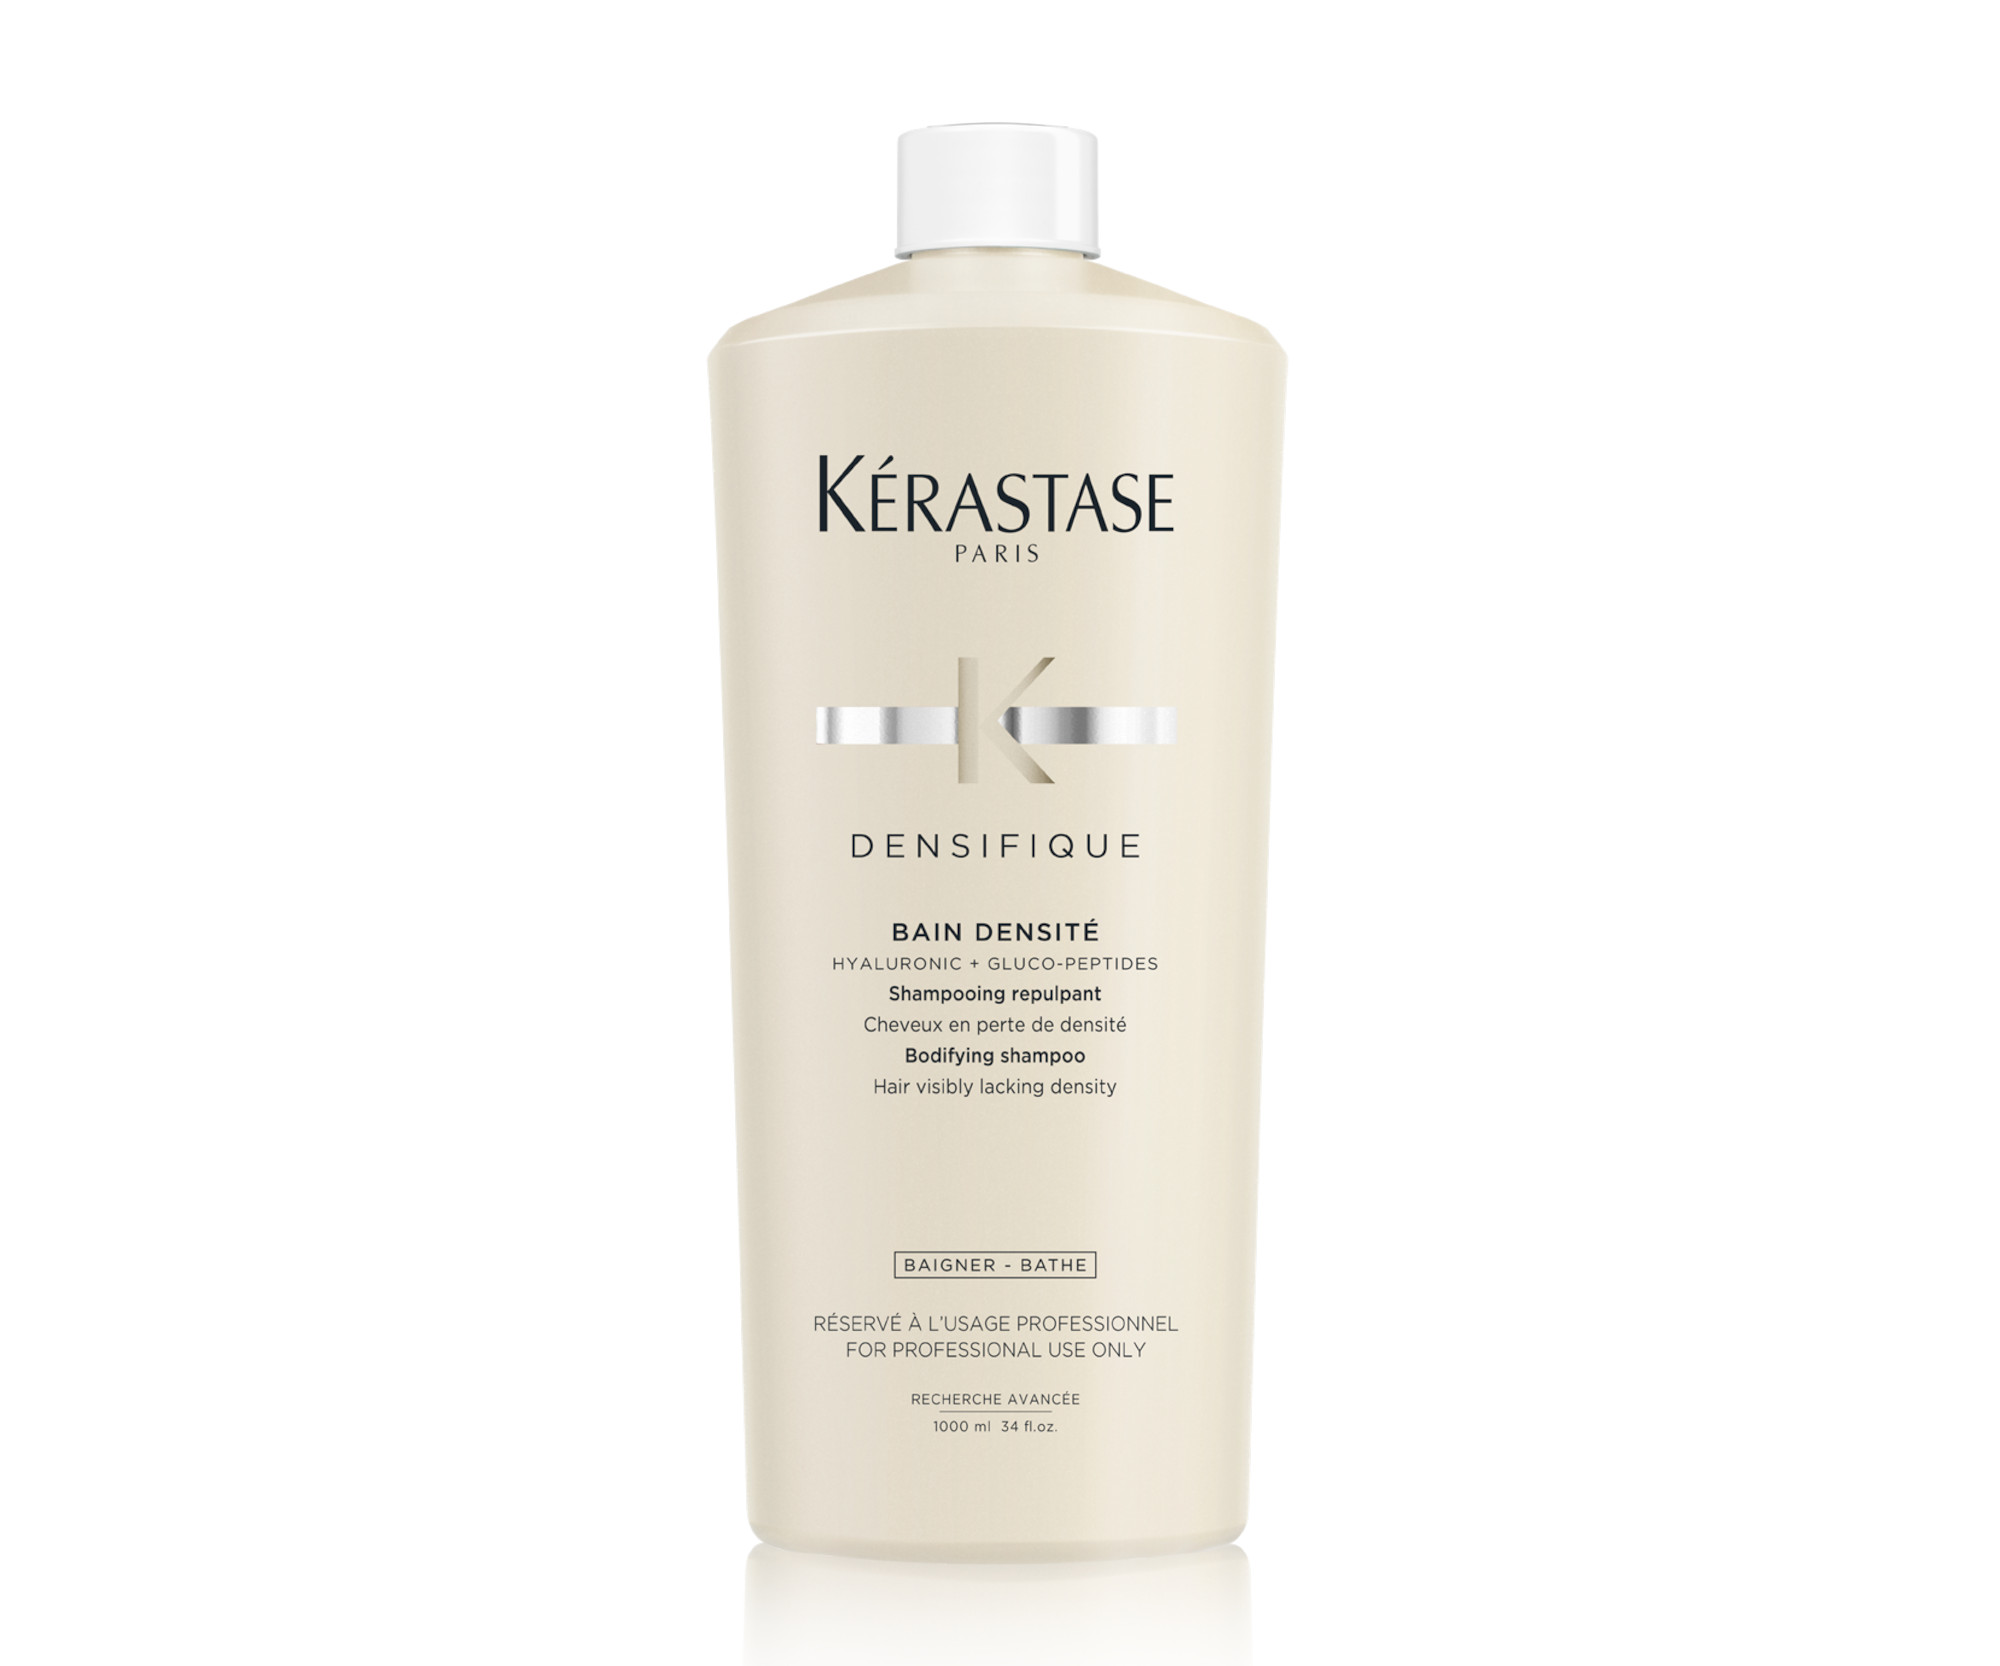 Šampon pro hustotu vlasů Kérastase Densifique Densité - 1000 ml + dárek zdarma